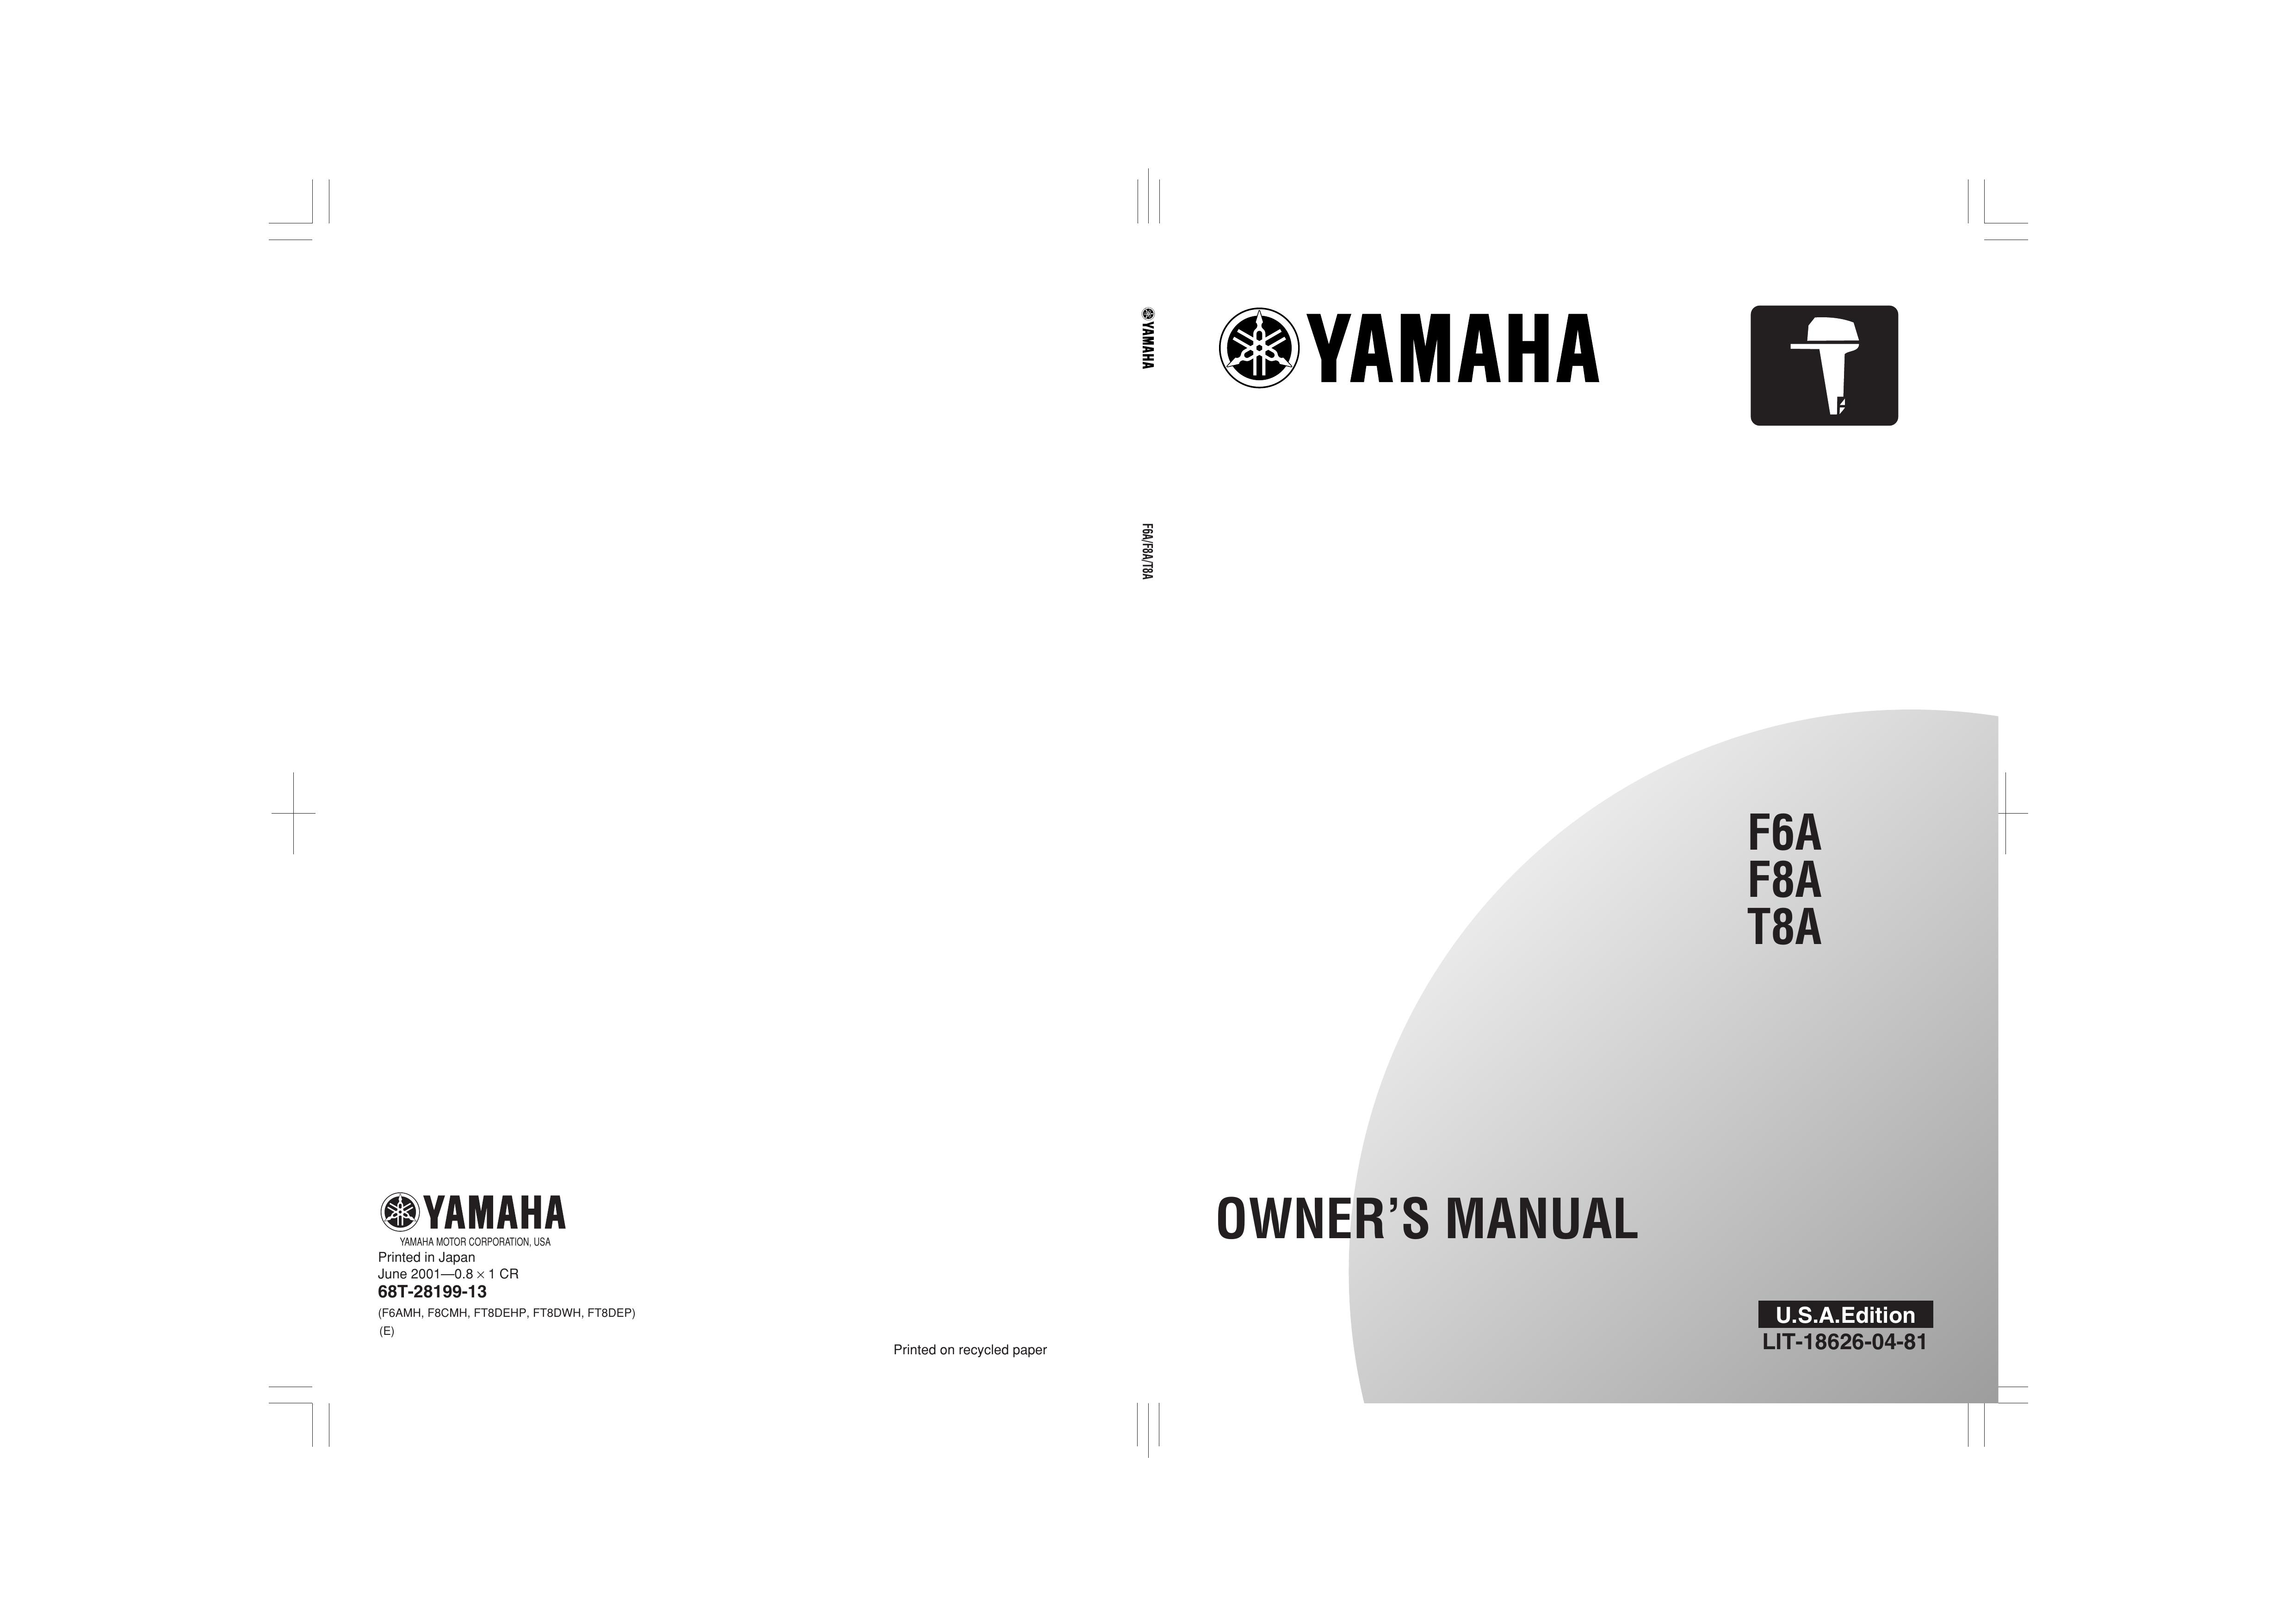 Yamaha F6A Outboard Motor User Manual